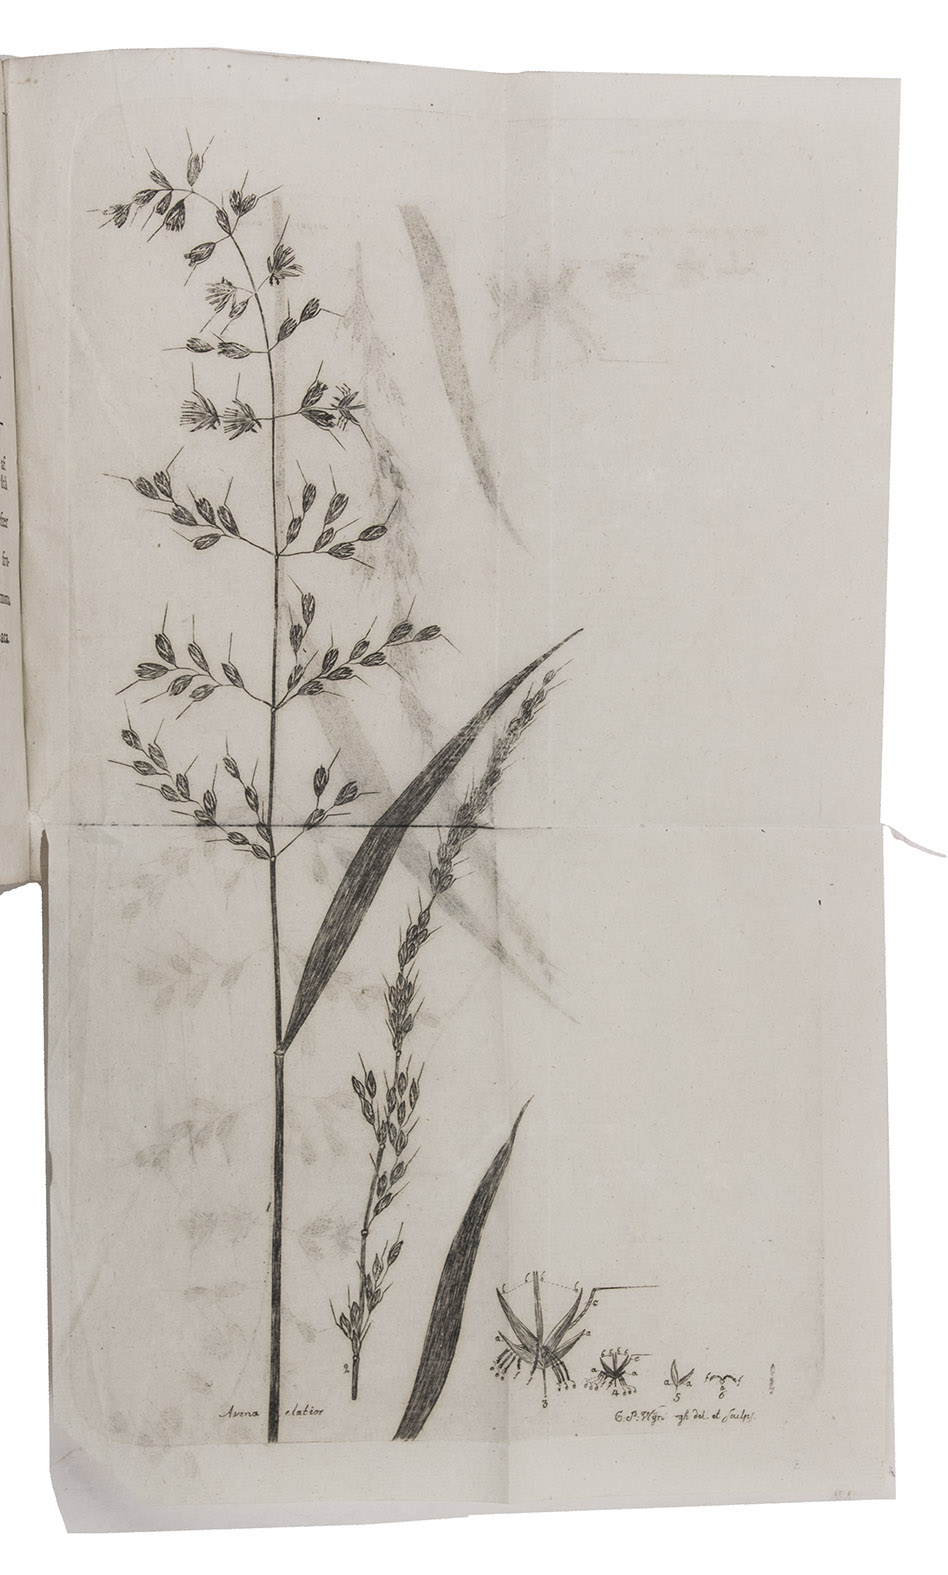 BRUZELIUS, Carl and Engelbert JRLIN. - Avena elatior, knyl-hafre eller fromental.Lund, C.G. Berling, 1781. 4to. With a folding engraved plate. Disbound.